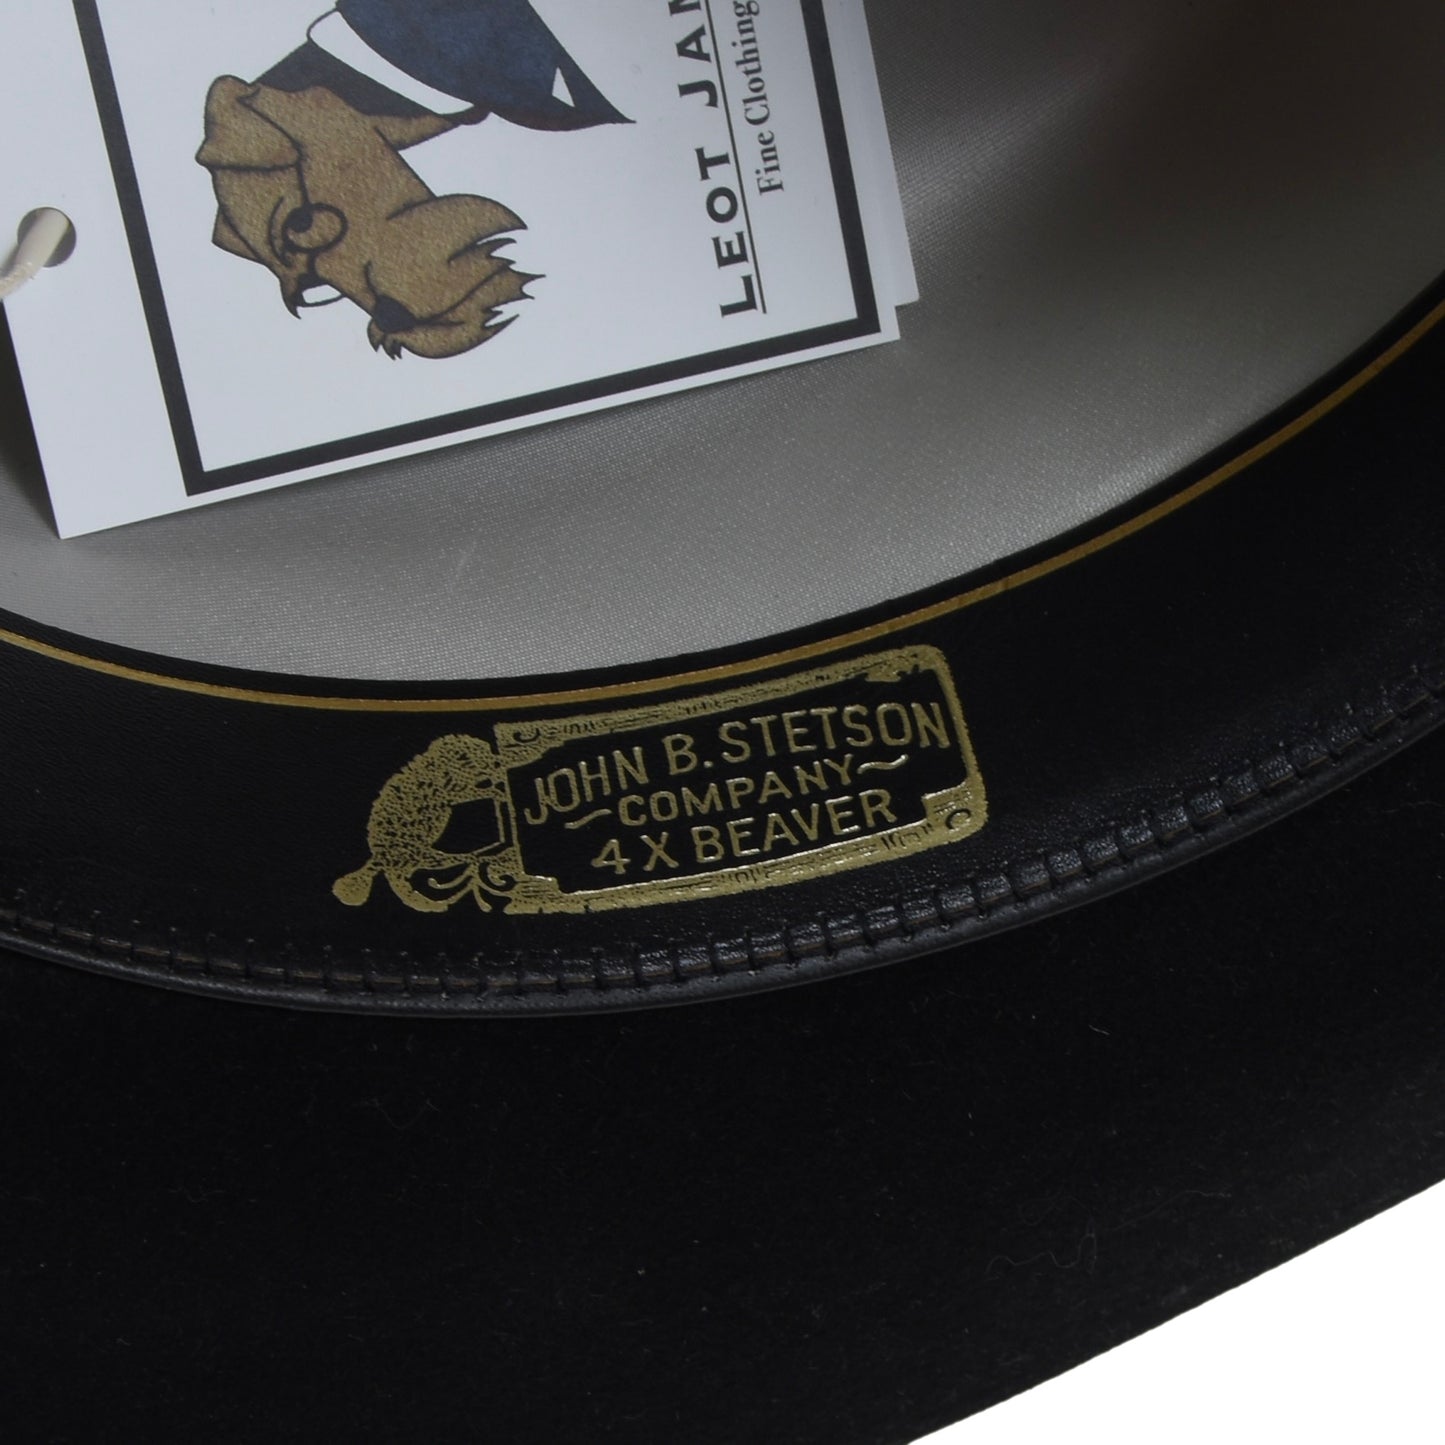 Stetson Rancher 4X Beaver Western Hat Size US 7 56 - Black